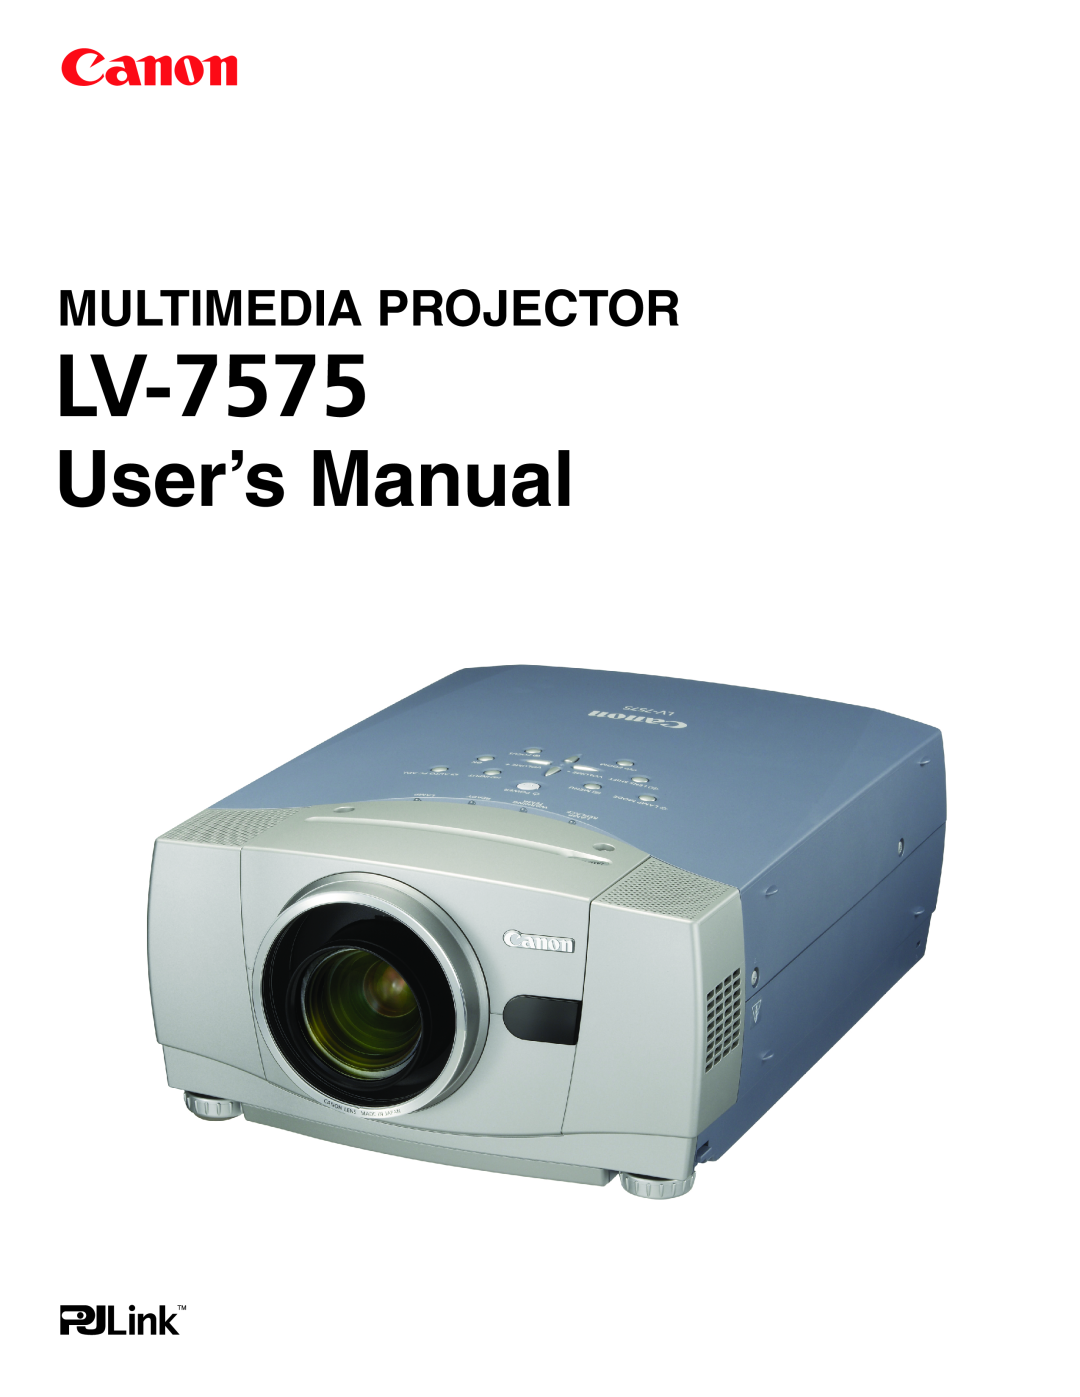 Canon LV-7575 user manual User’s Manual, Multimedia Projector 